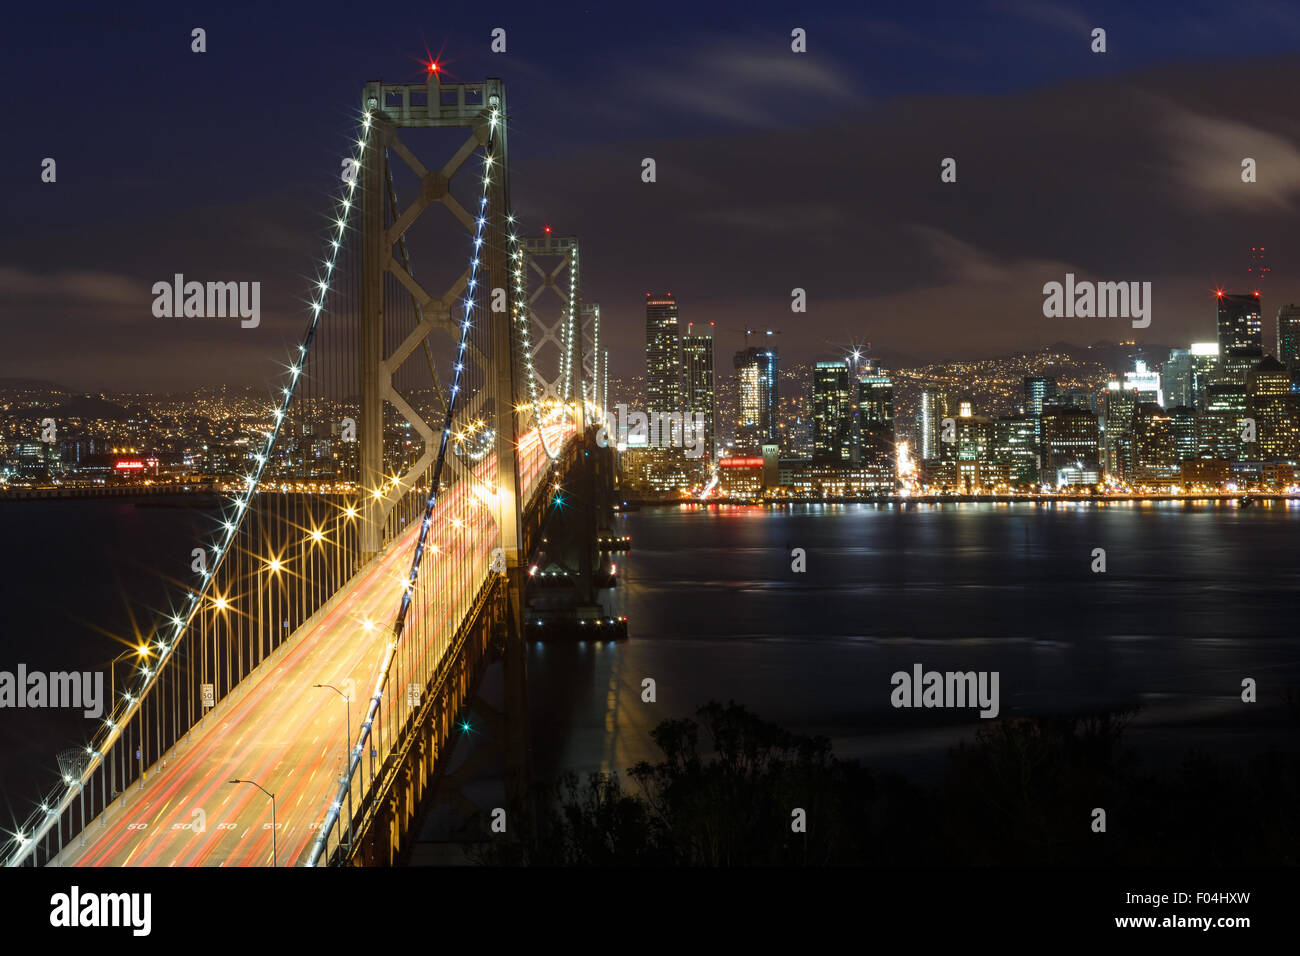 San Francisco Bay Bridge And Skyline At Night With City Lights Stock Photo Alamy